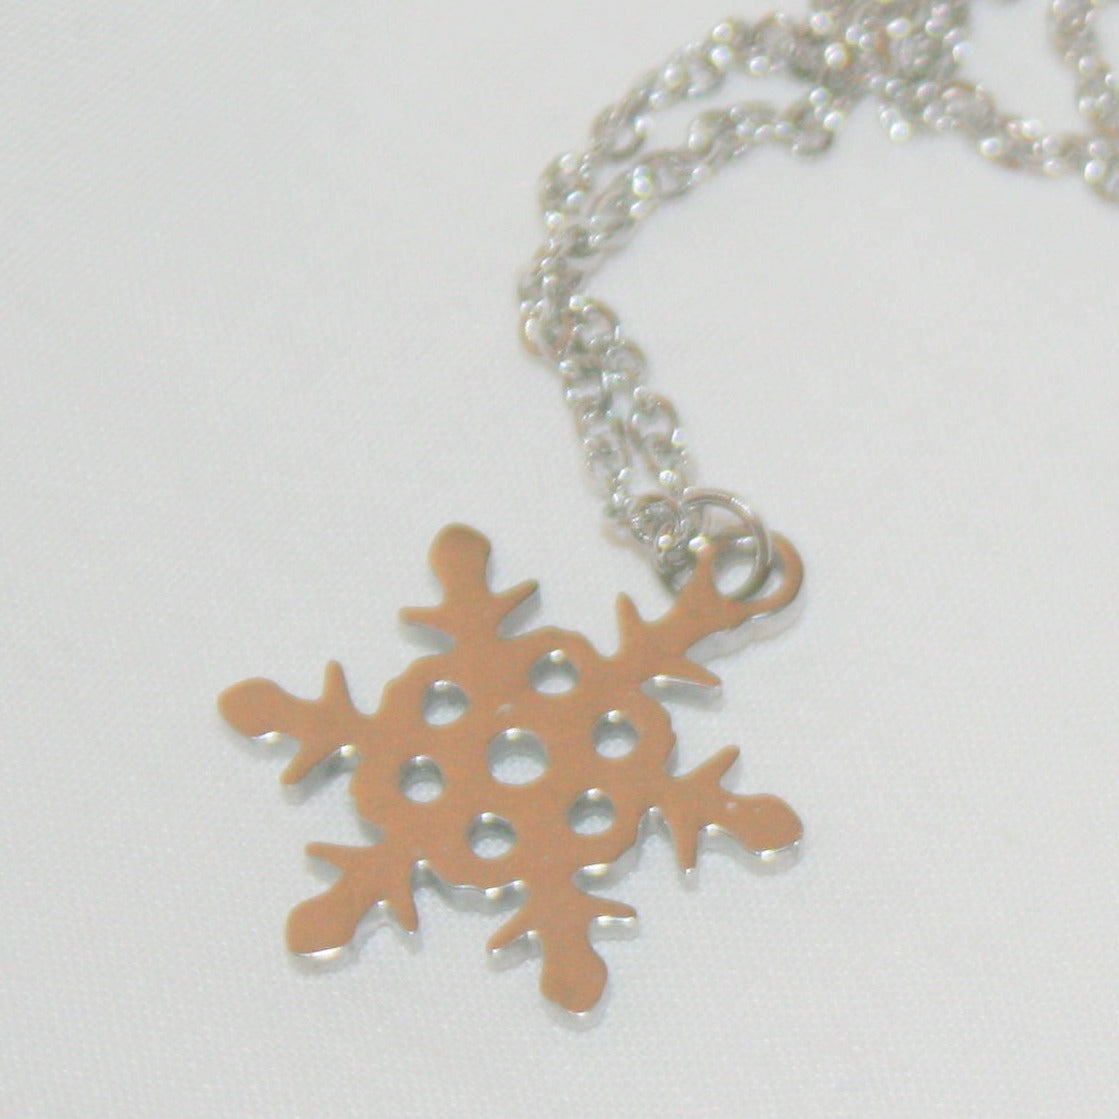 Stainless Steel Snowflake pendant  - pack of 5 - SN406